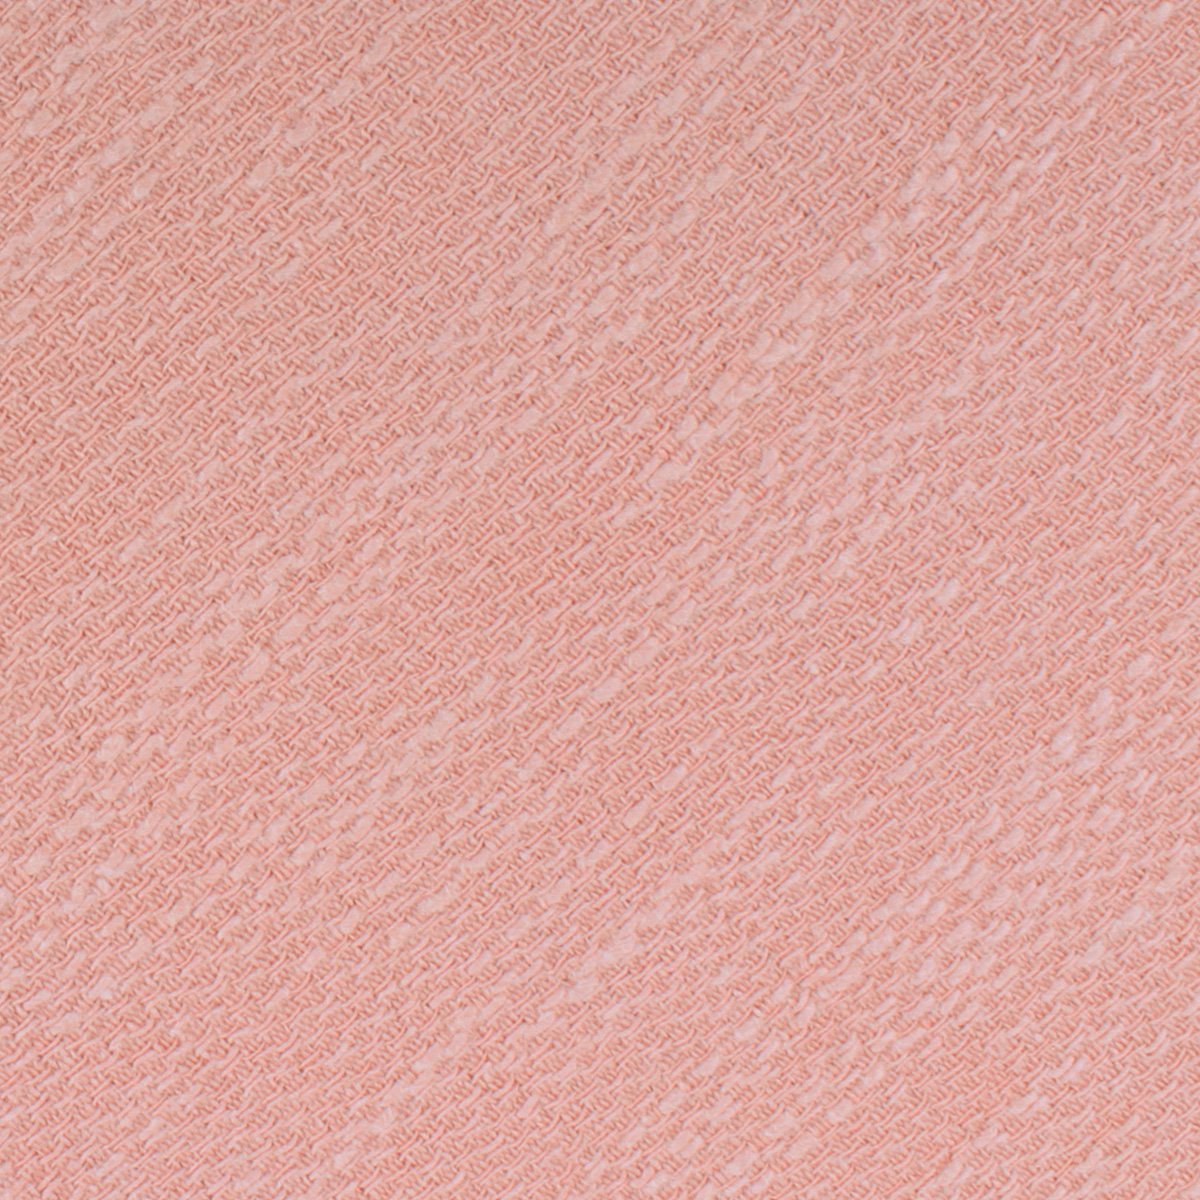 Blush Flamingo Pink Linen Skinny Tie Fabric